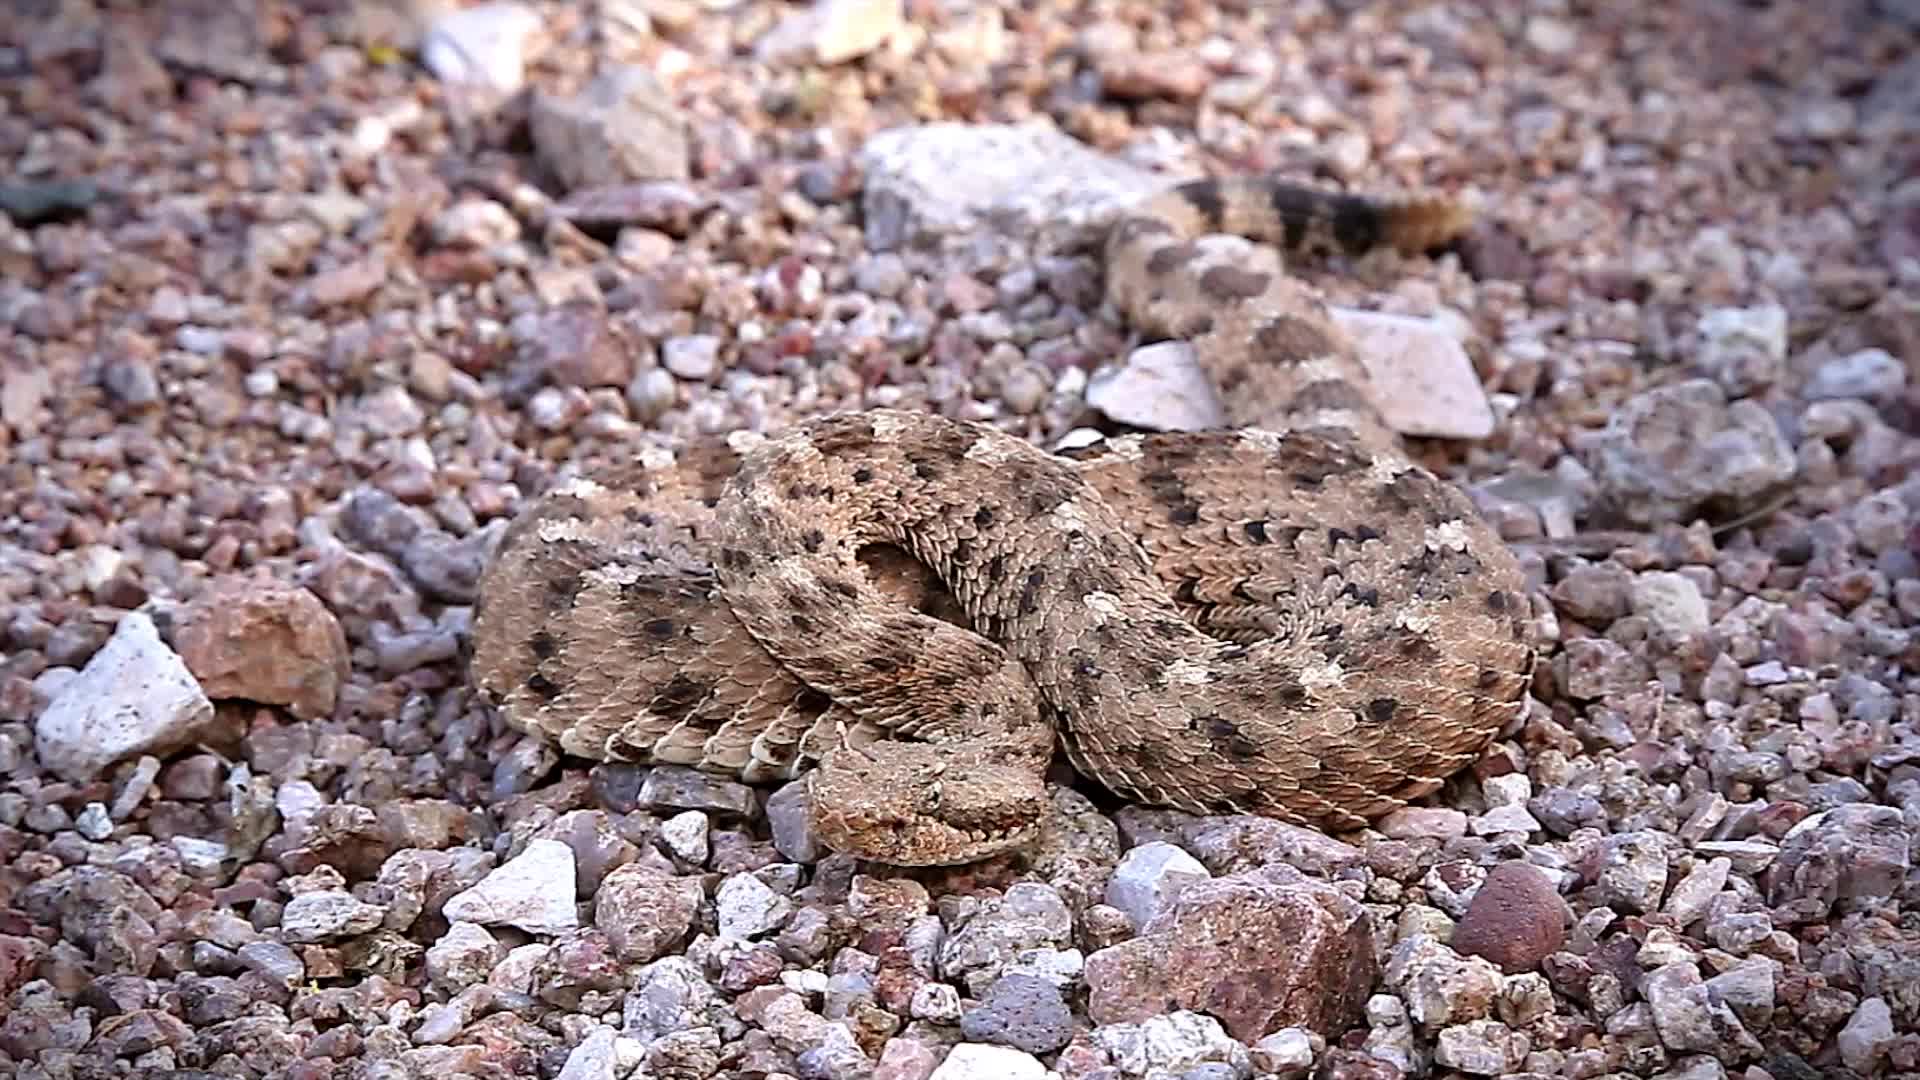 A Sidewinder Rattlesnake (Crotalus cerastes) rattling in Arizona